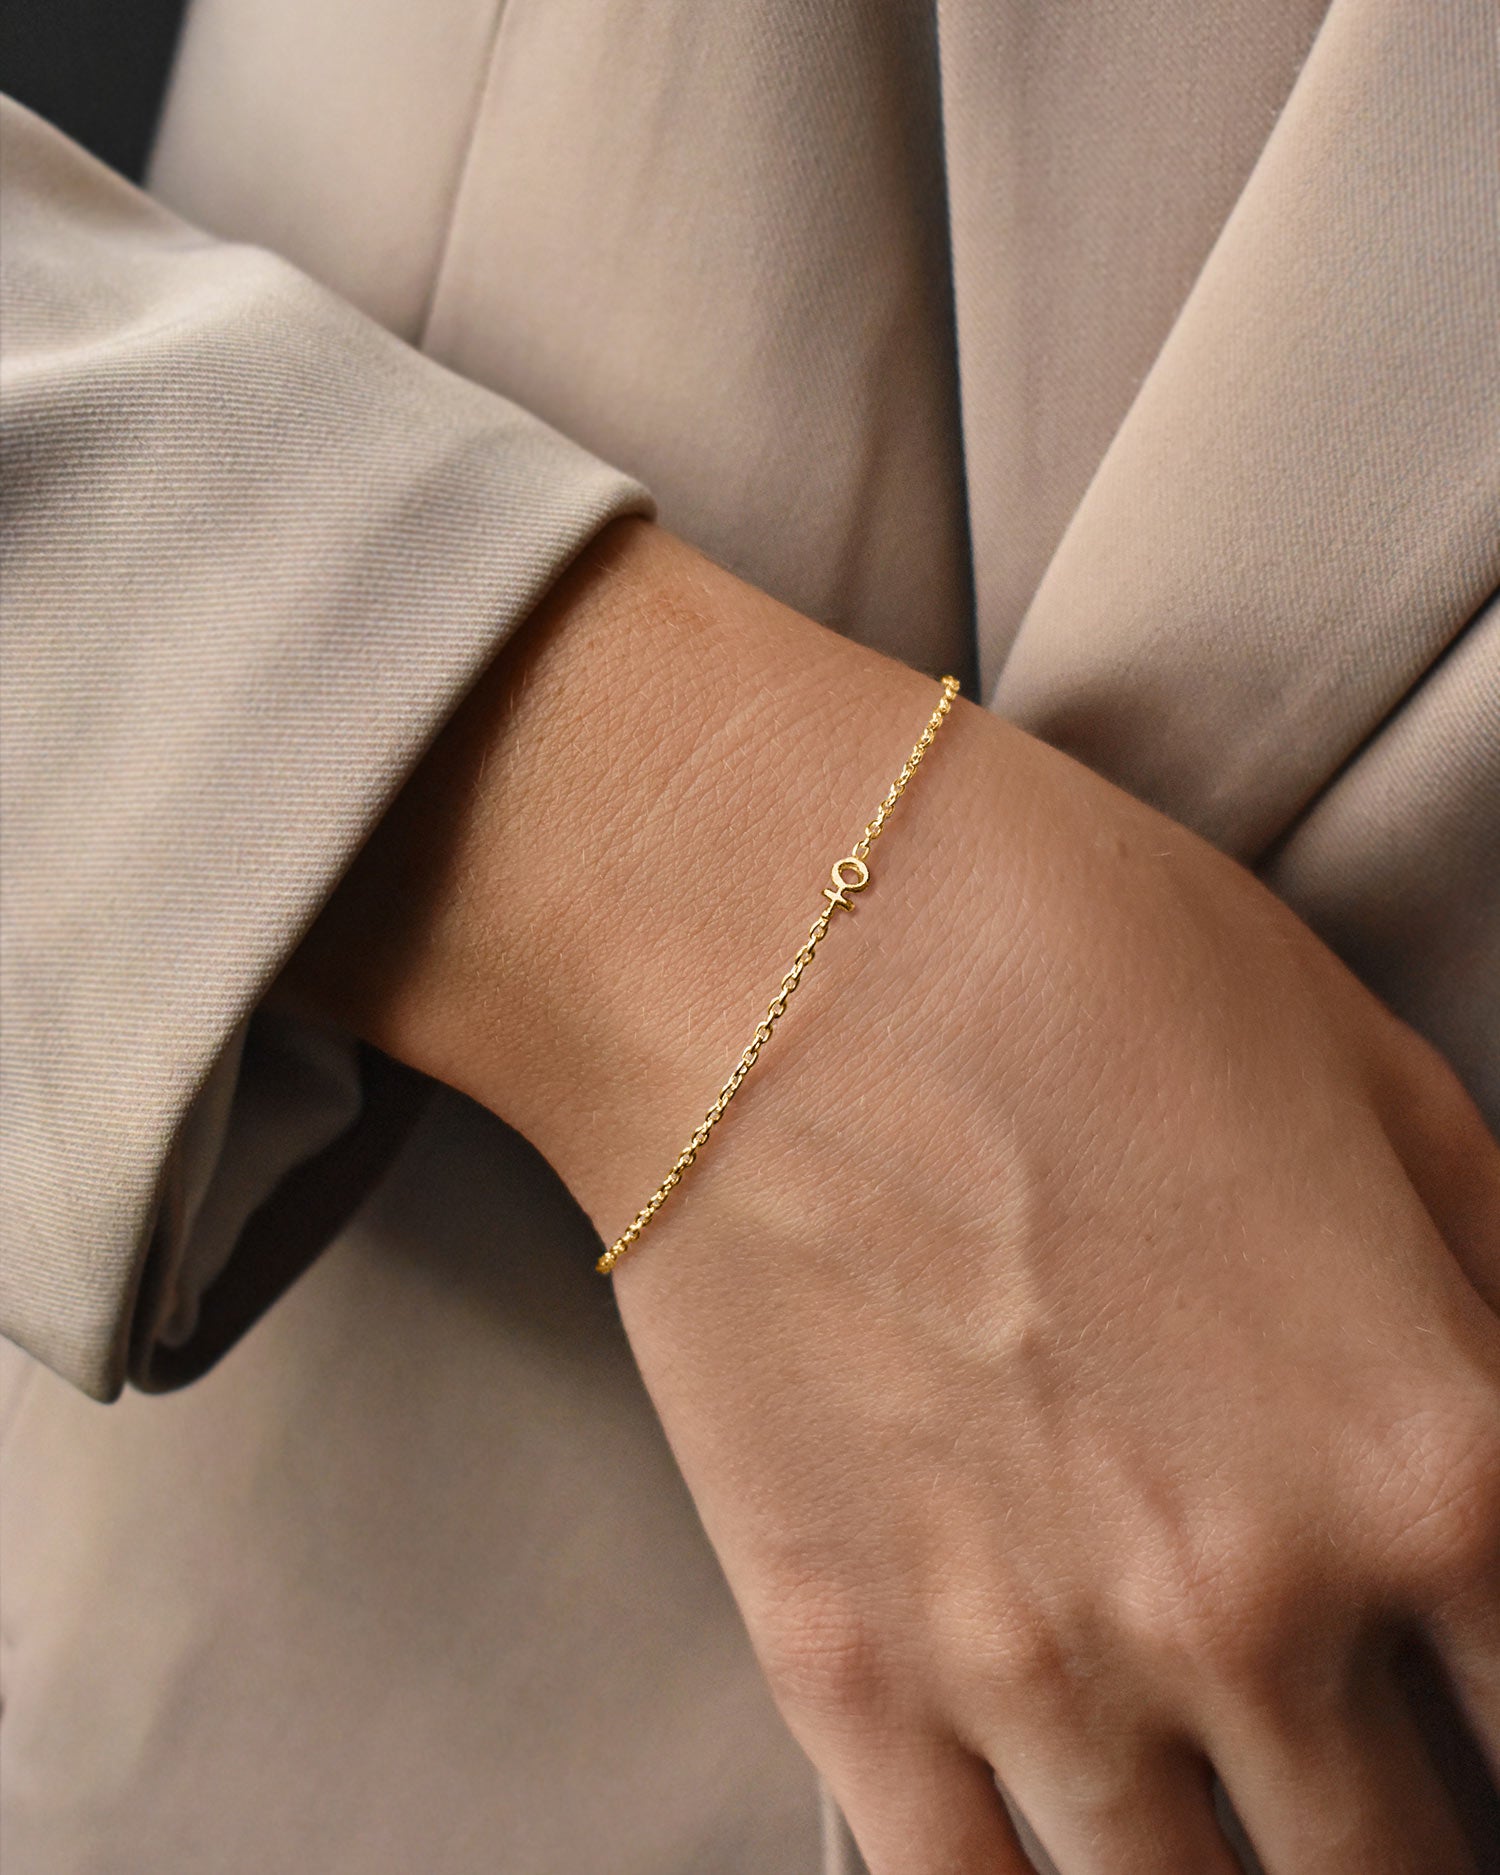 Women Unite drop bracelet gold